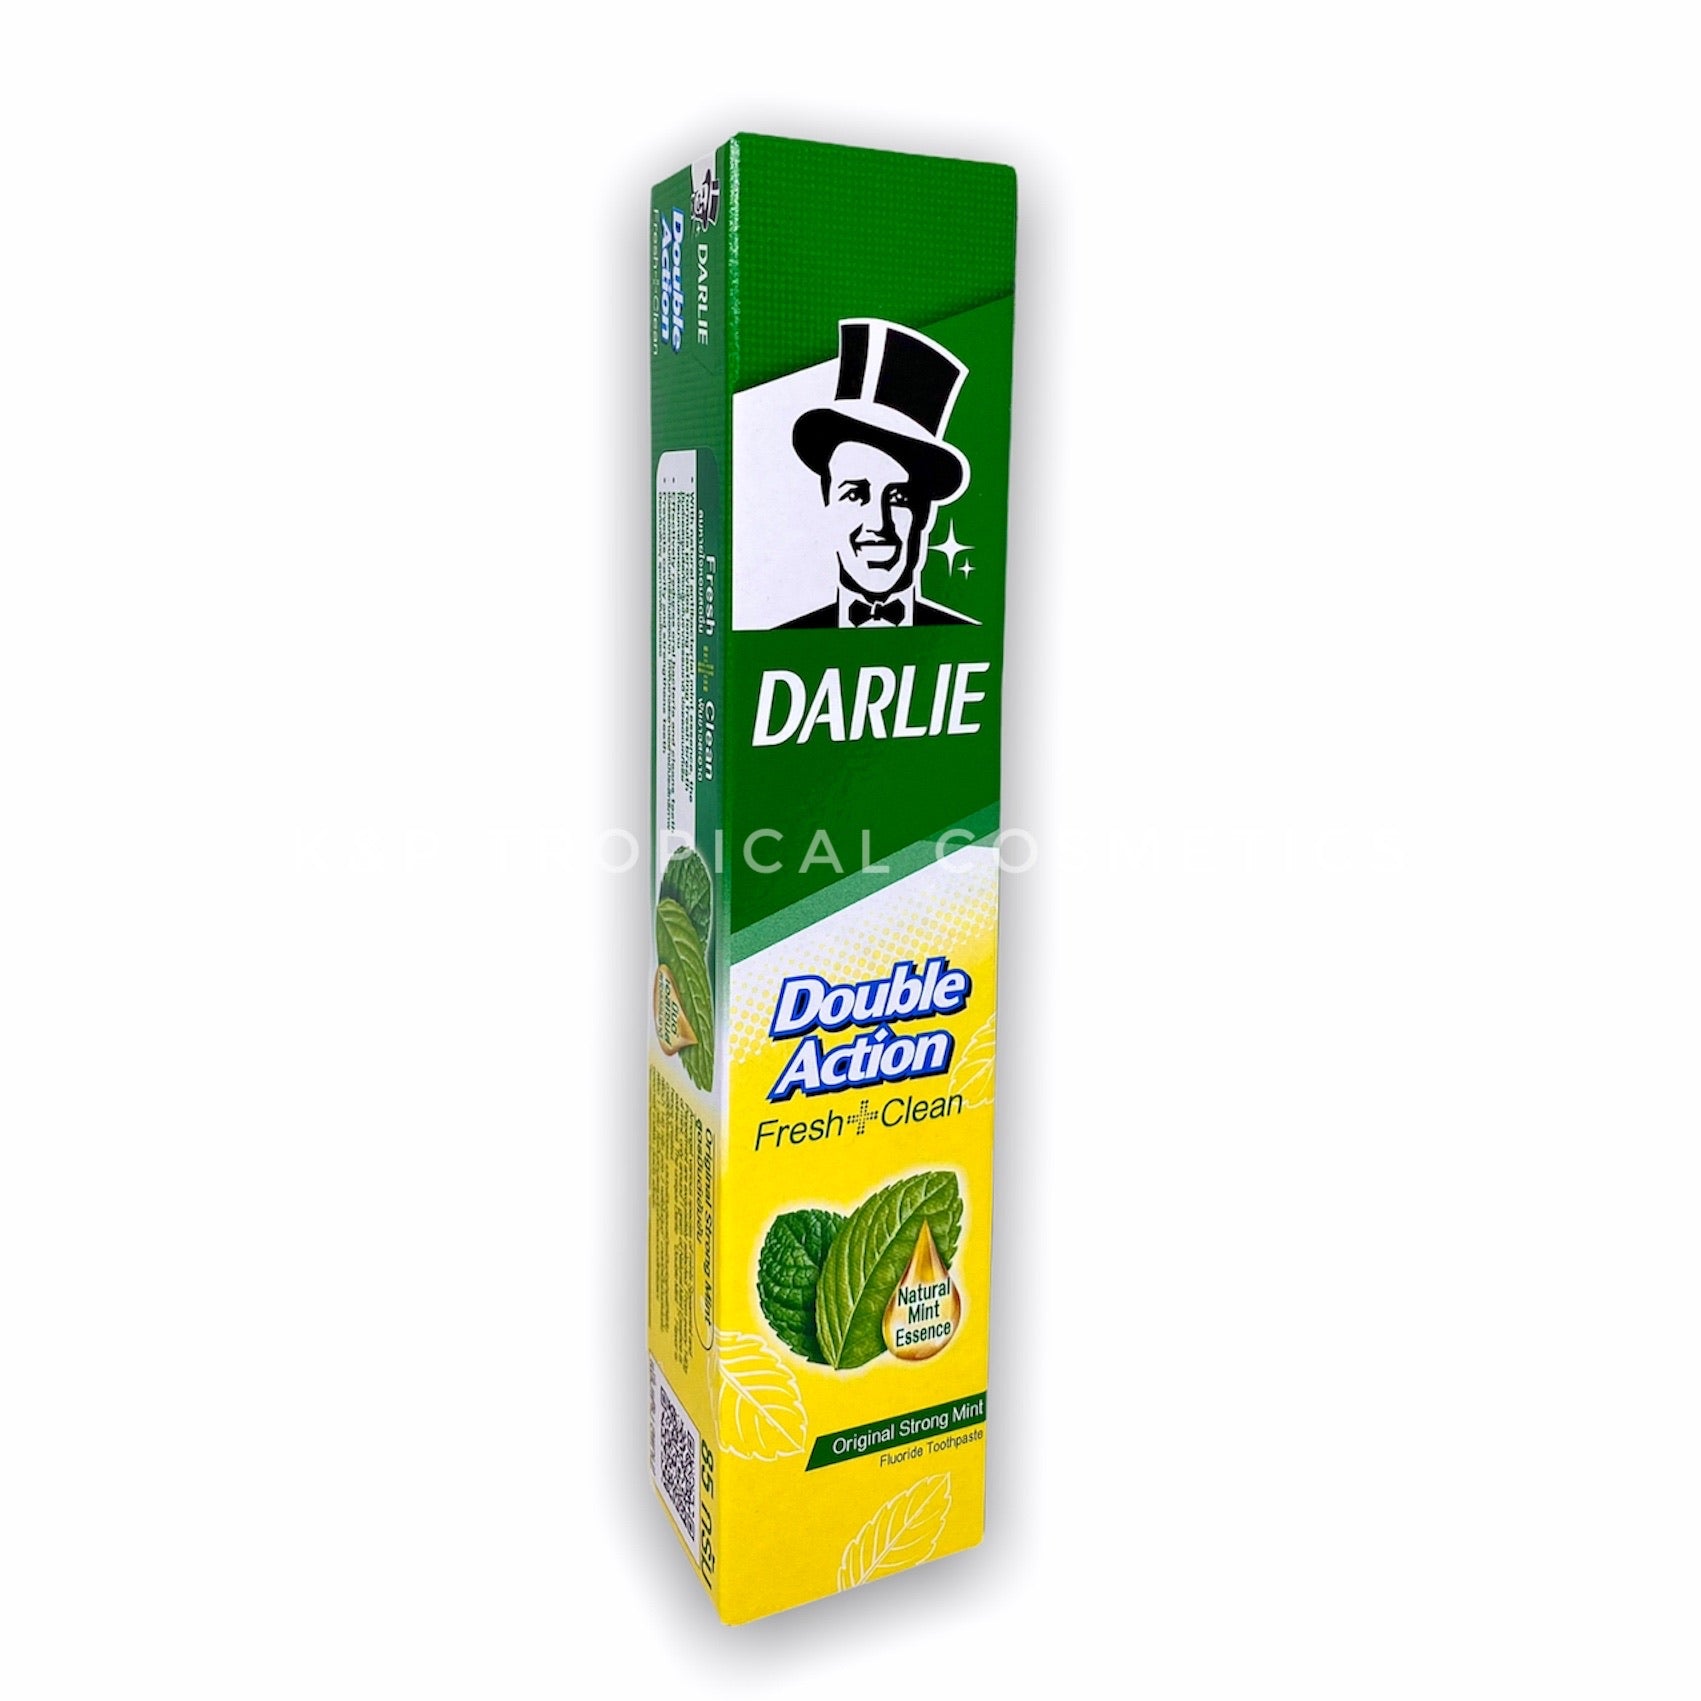 Darlie Double Action Toothpaste 35 g., Зубная паста "Двойное действие" 35 гр.